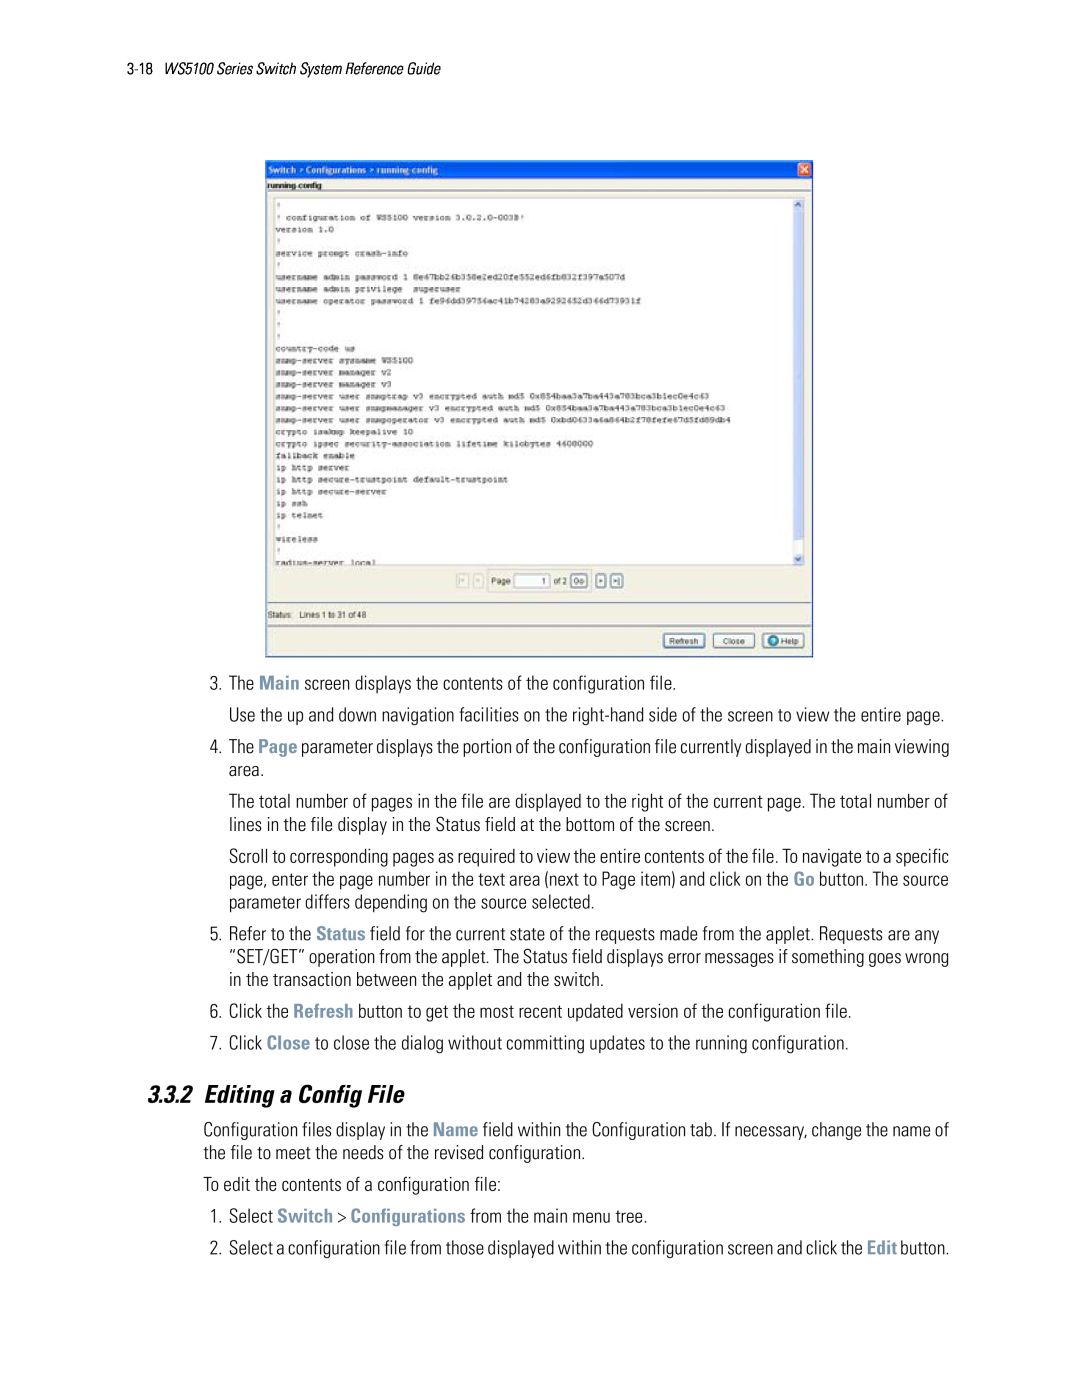 Motorola WS5100 manual 3.3.2Editing a Config File 